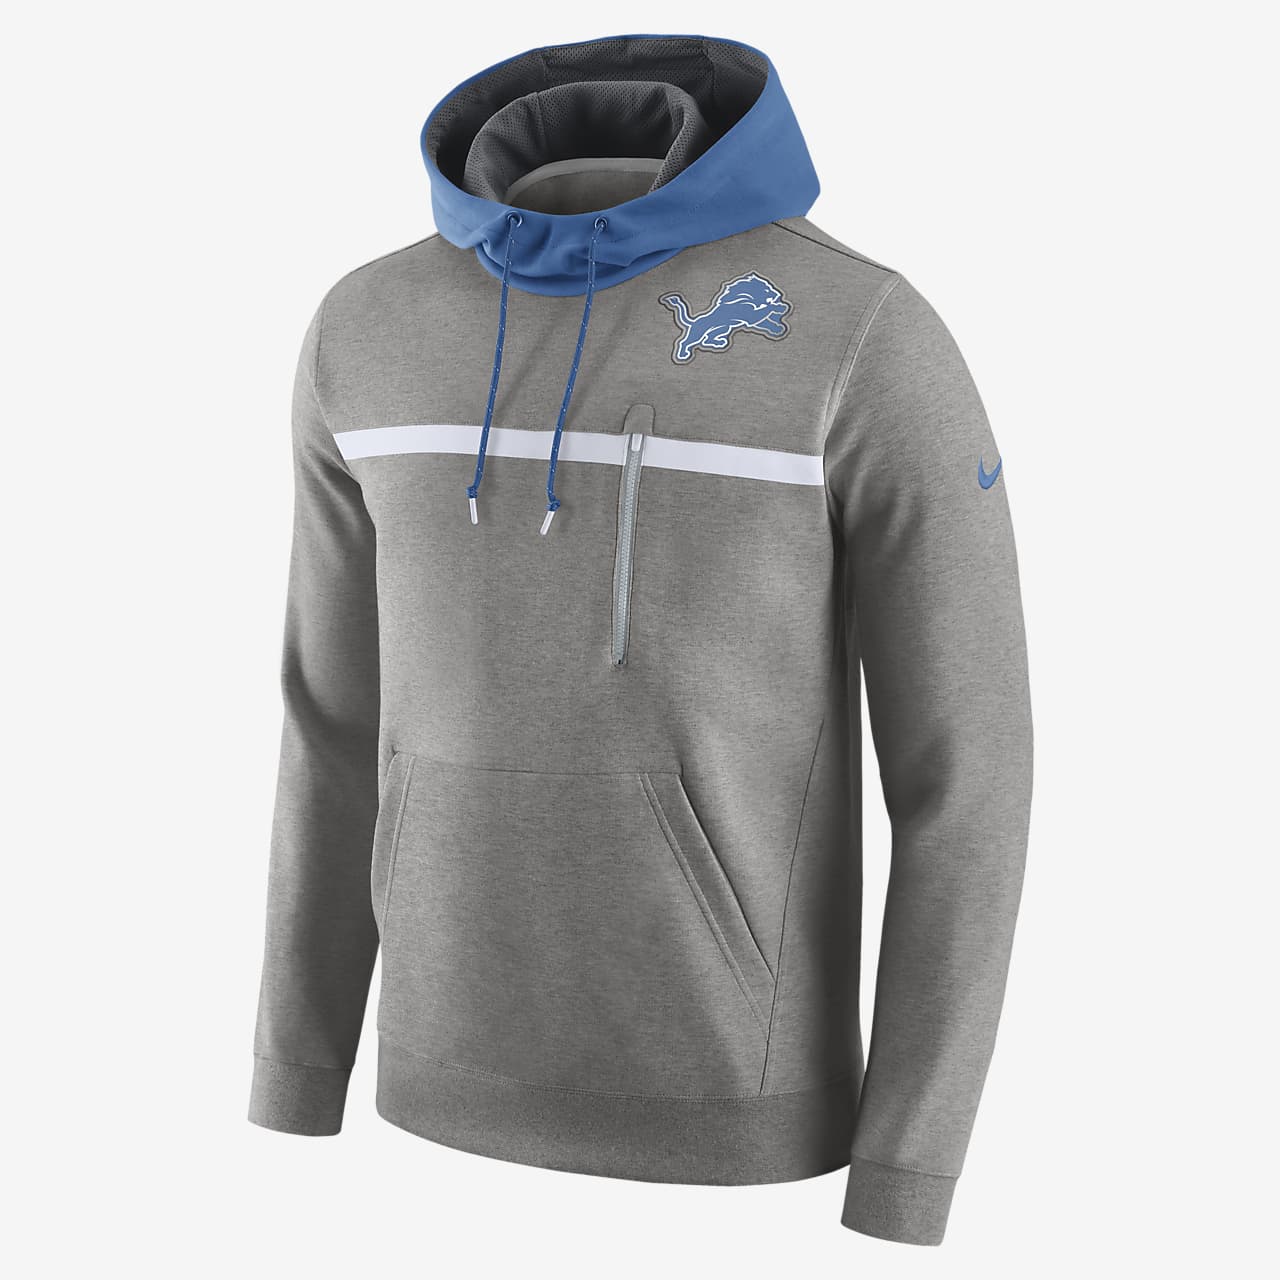 Nike Championship Drive Sweatshirt (NFL Lions) Men's Hoodie